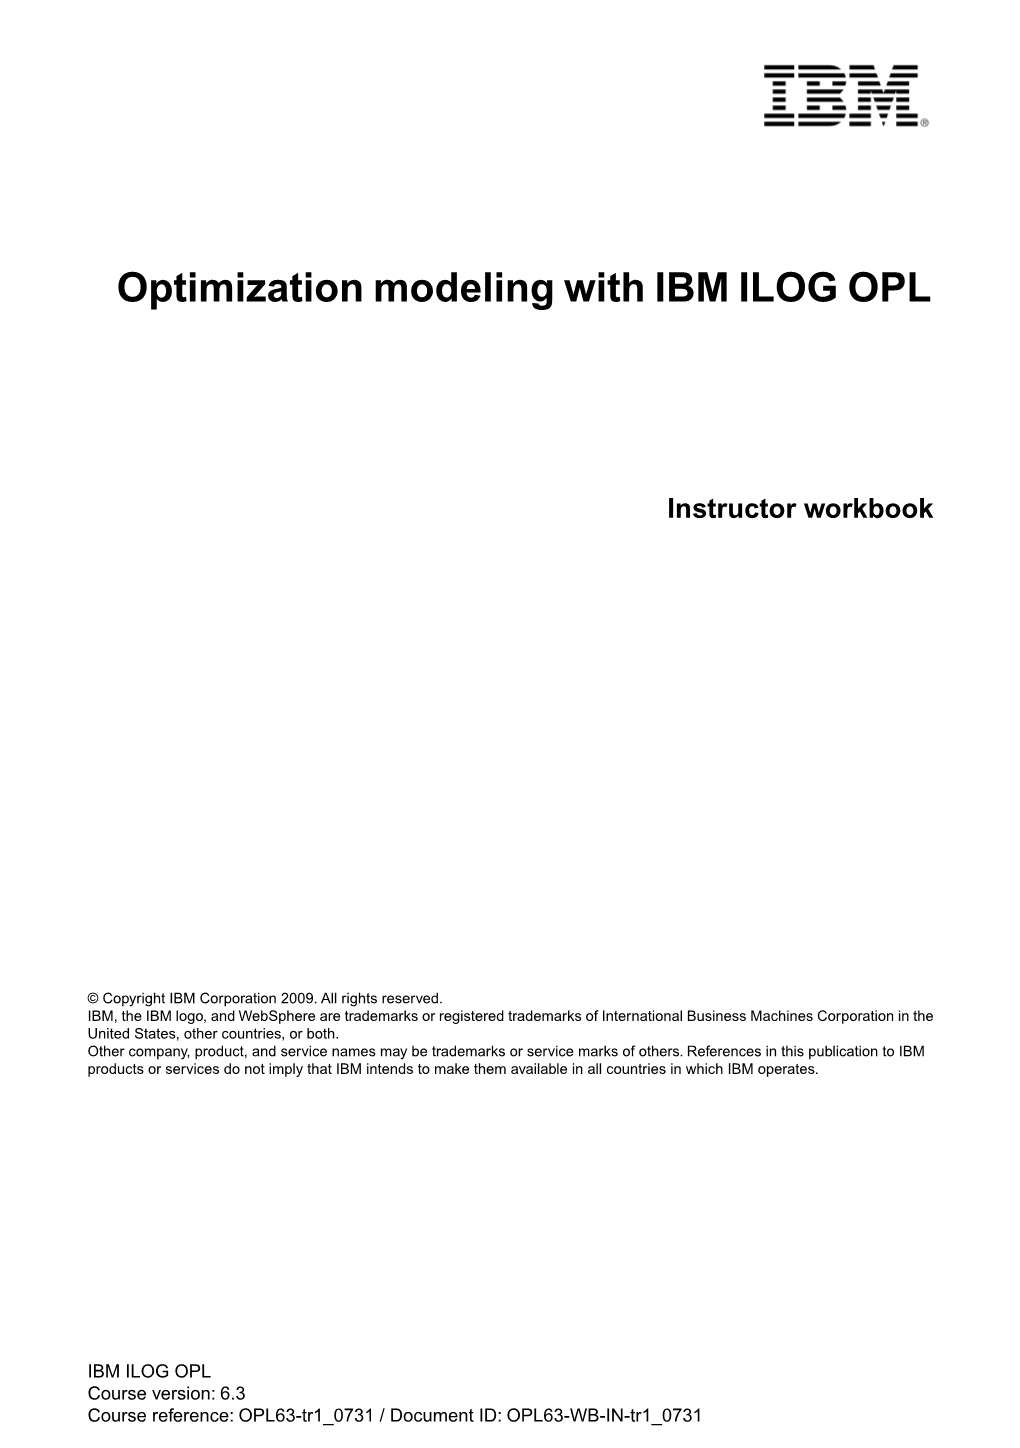 Optimization Modeling with IBM ILOG OPL